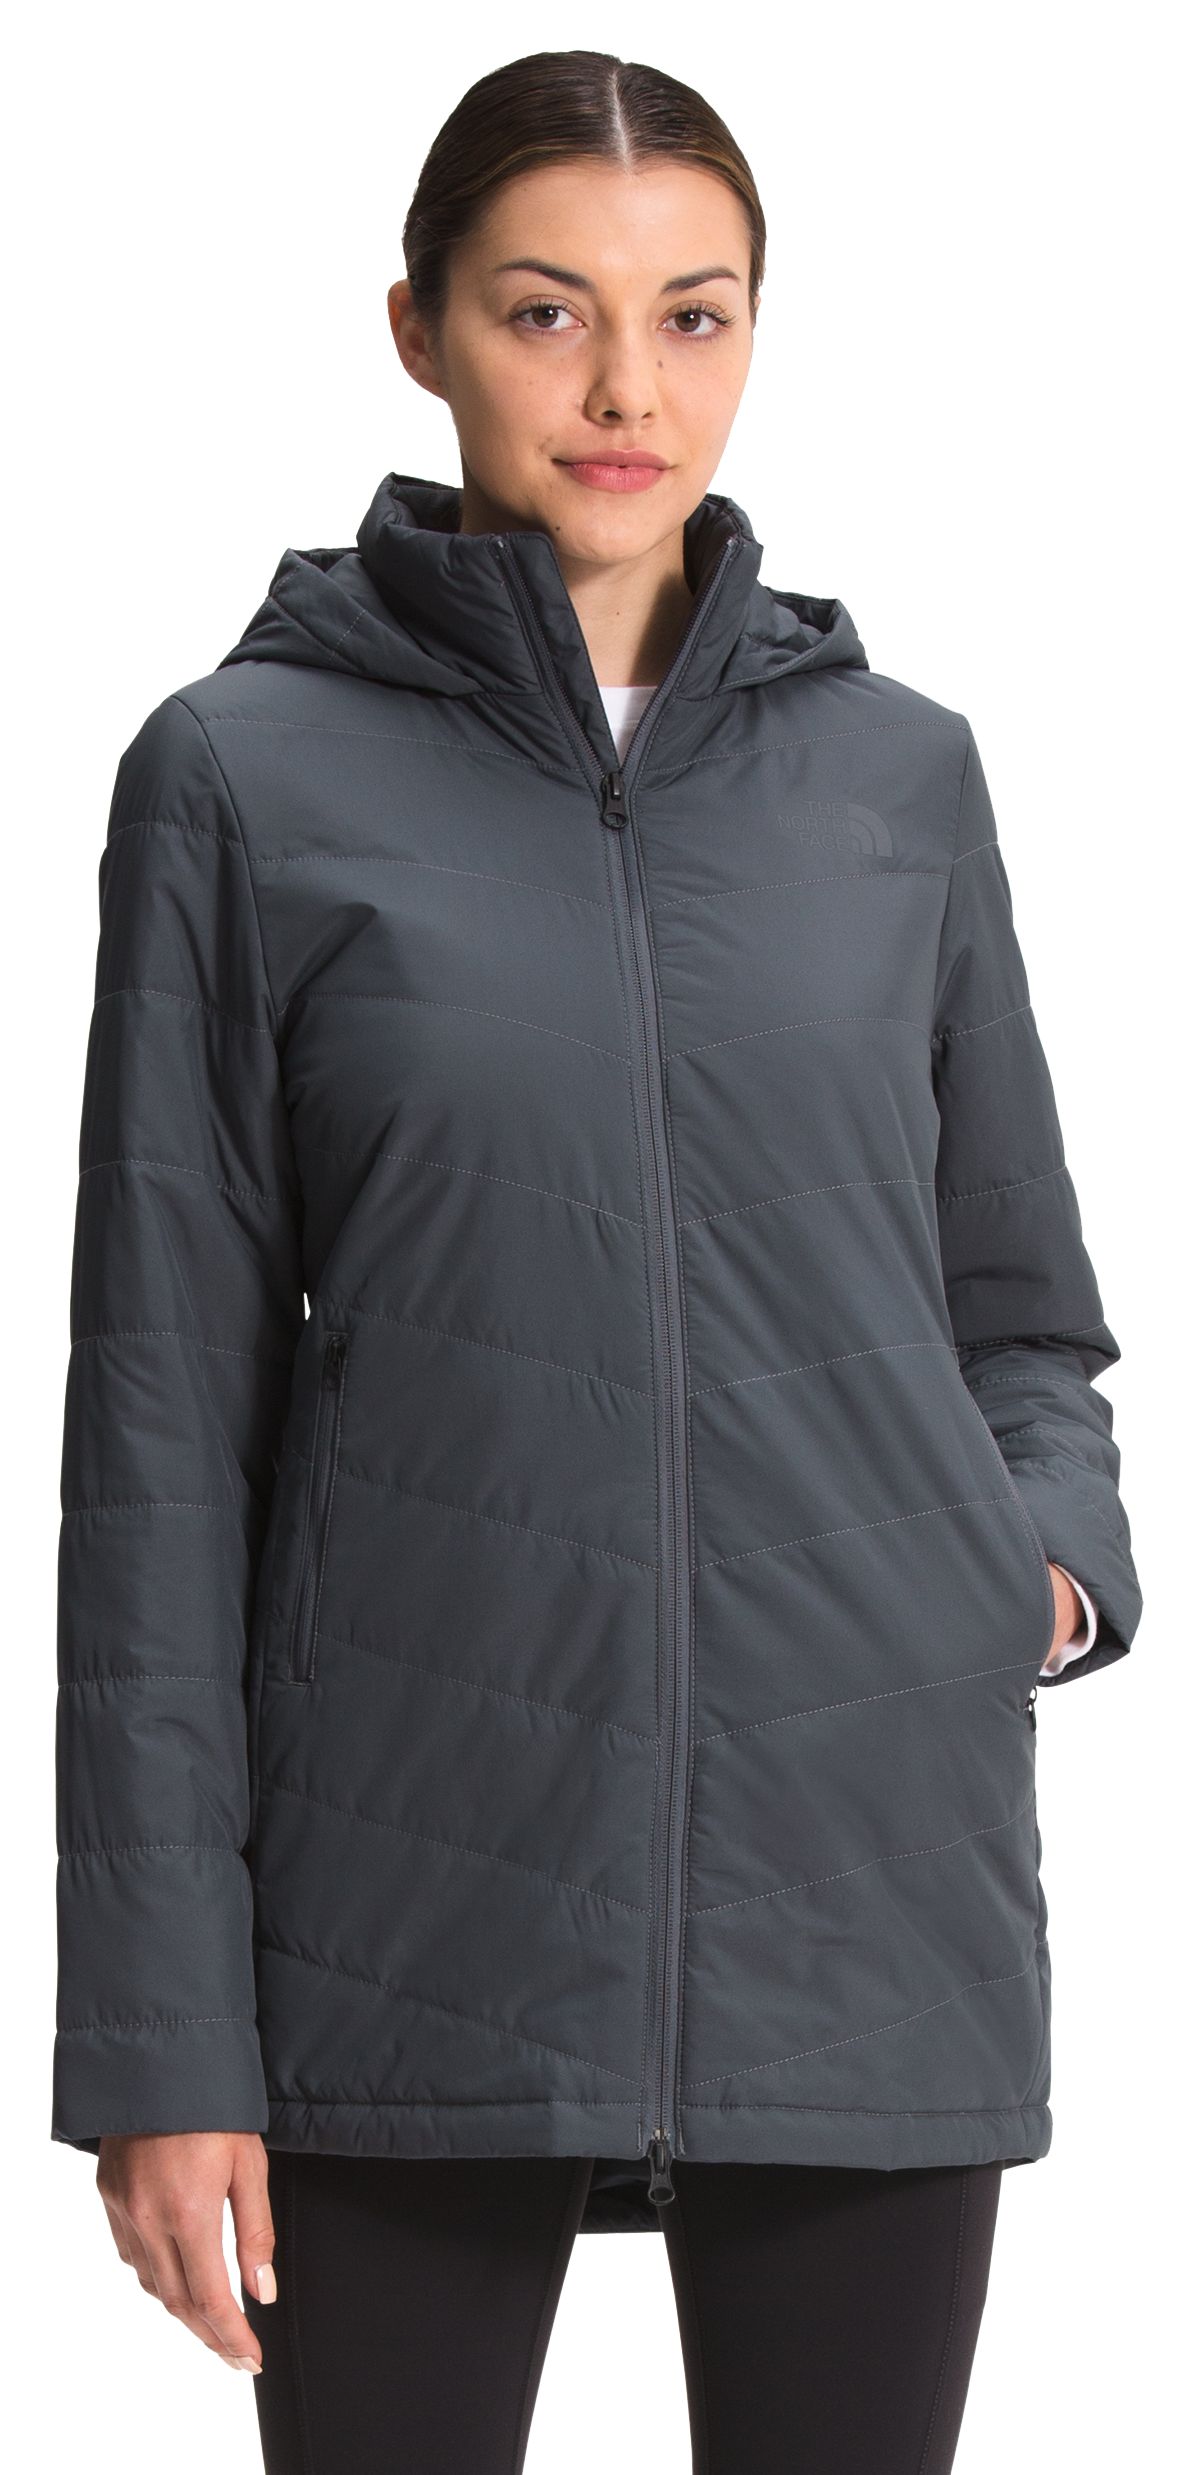 The North Face Solid Tamburello Parka for Ladies - Vanadis Grey - XL